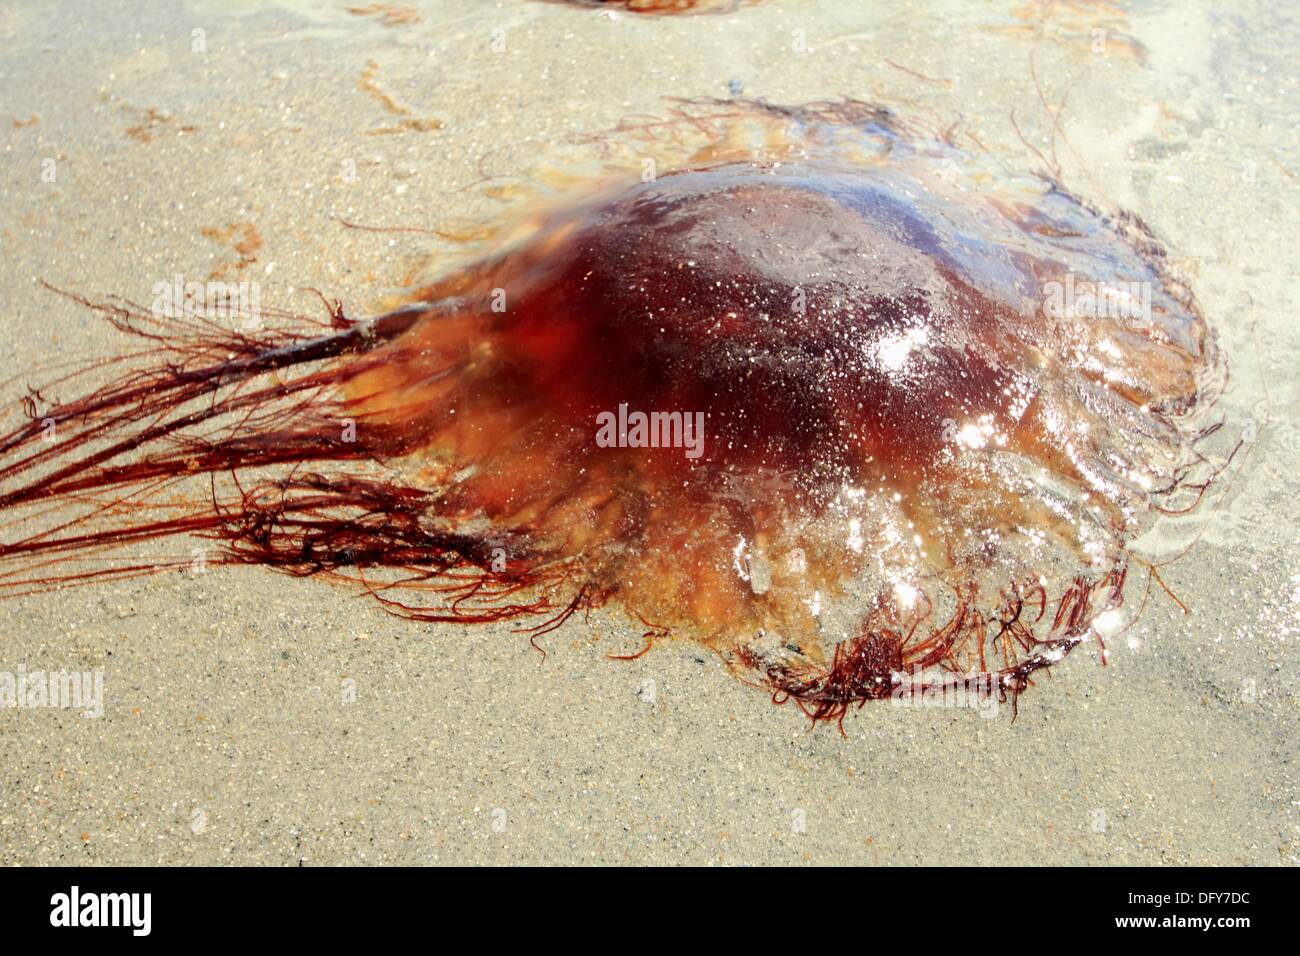 a common Moon Jellyfish, Aurelia aurita, washed up on a beach. Stock Photo